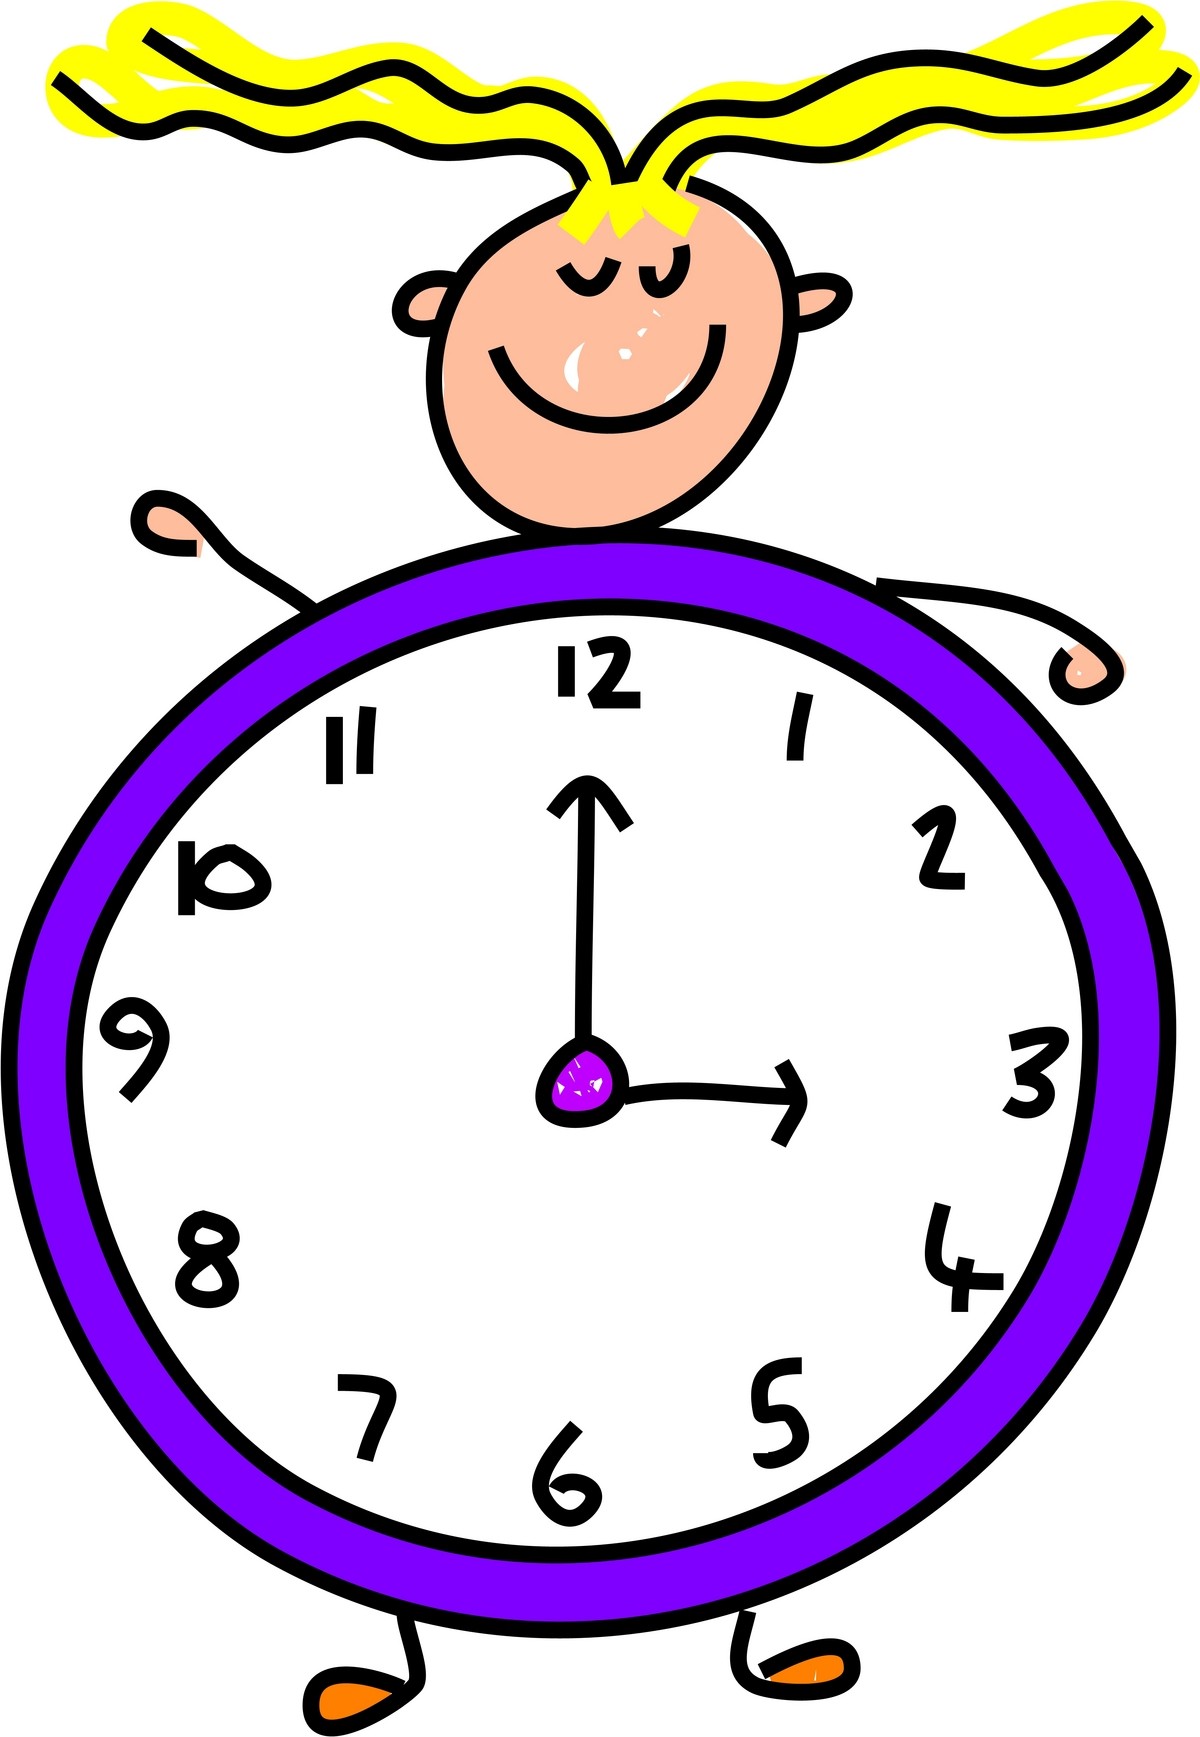 Clock times clipart - ClipartFox